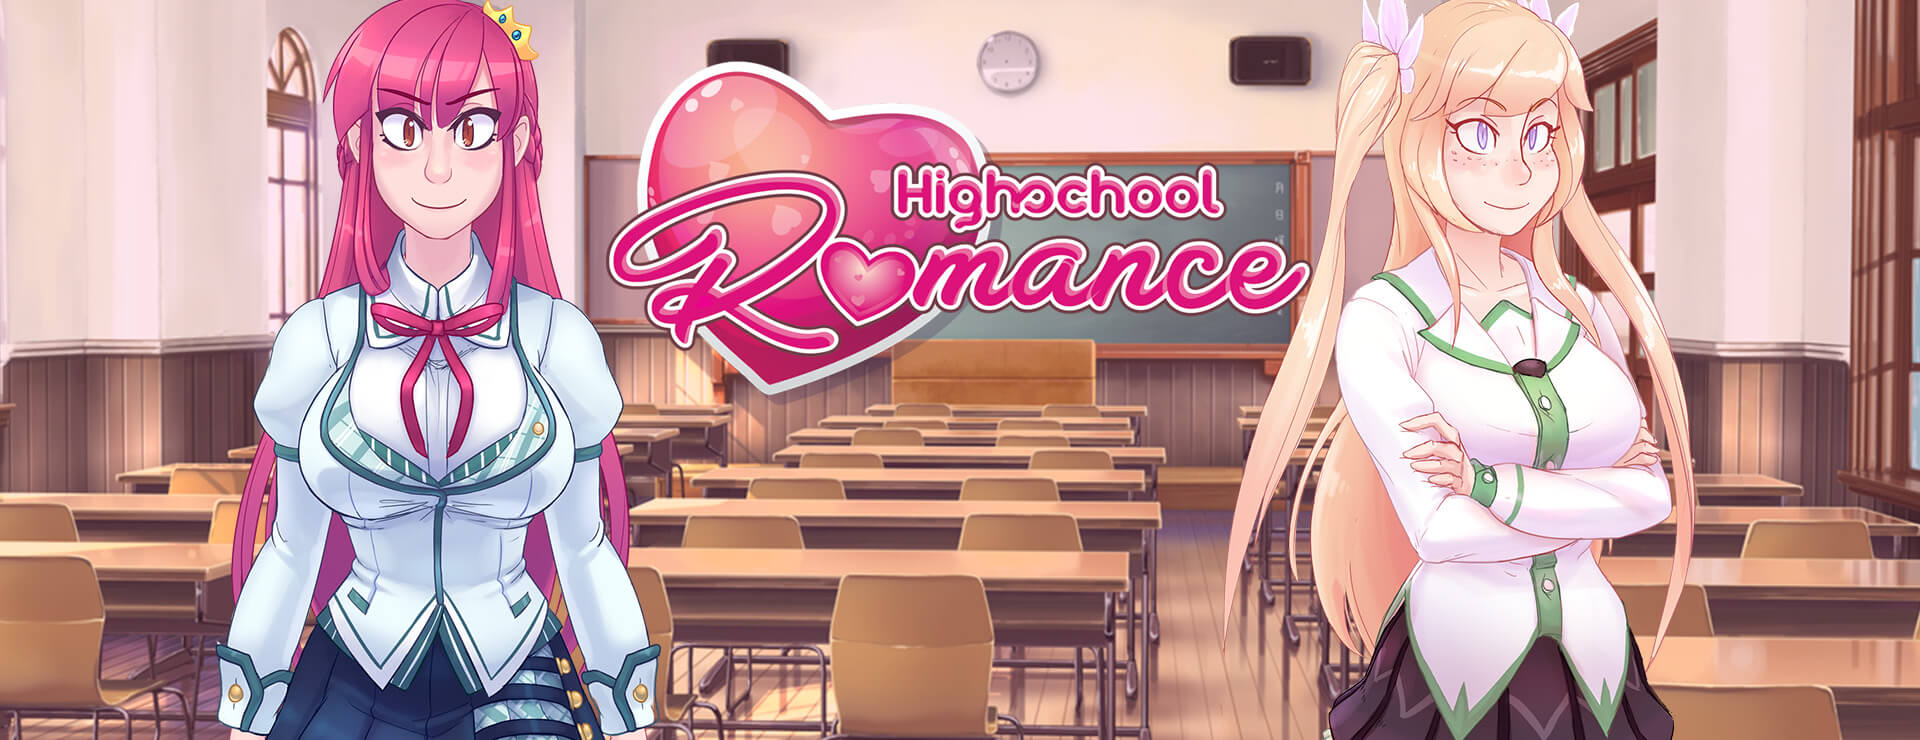 Highschool Romance - Roman Visuel Jeu